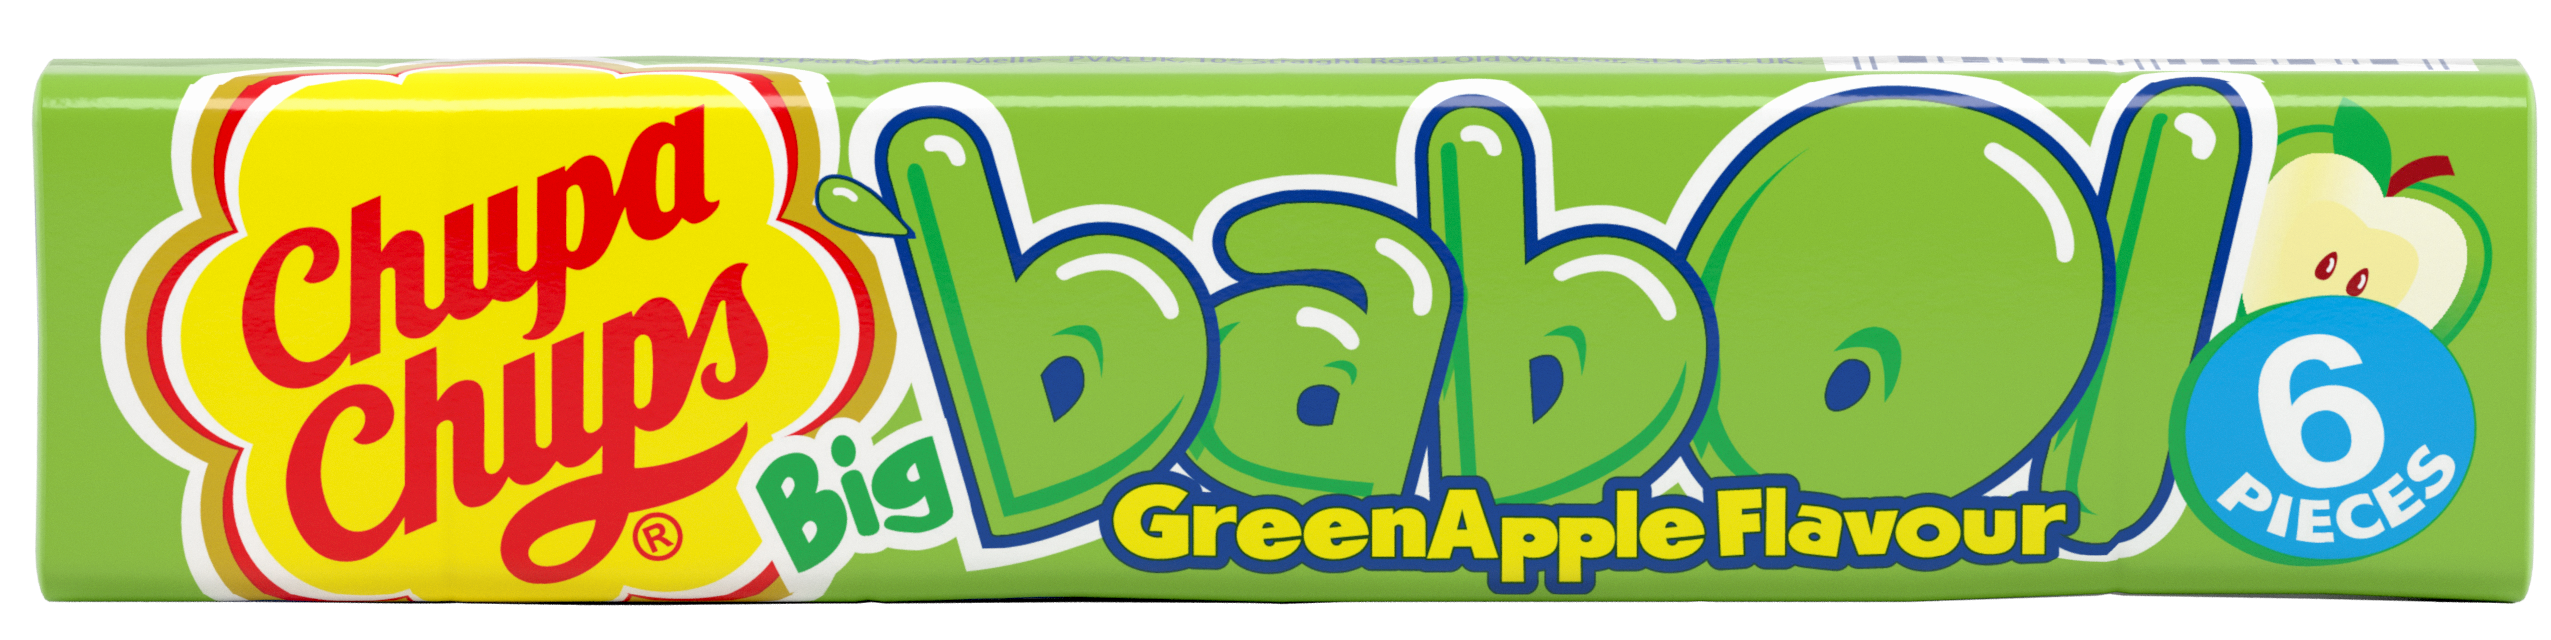 Chupa Chups launches Green Apple flavour in Big Babol range